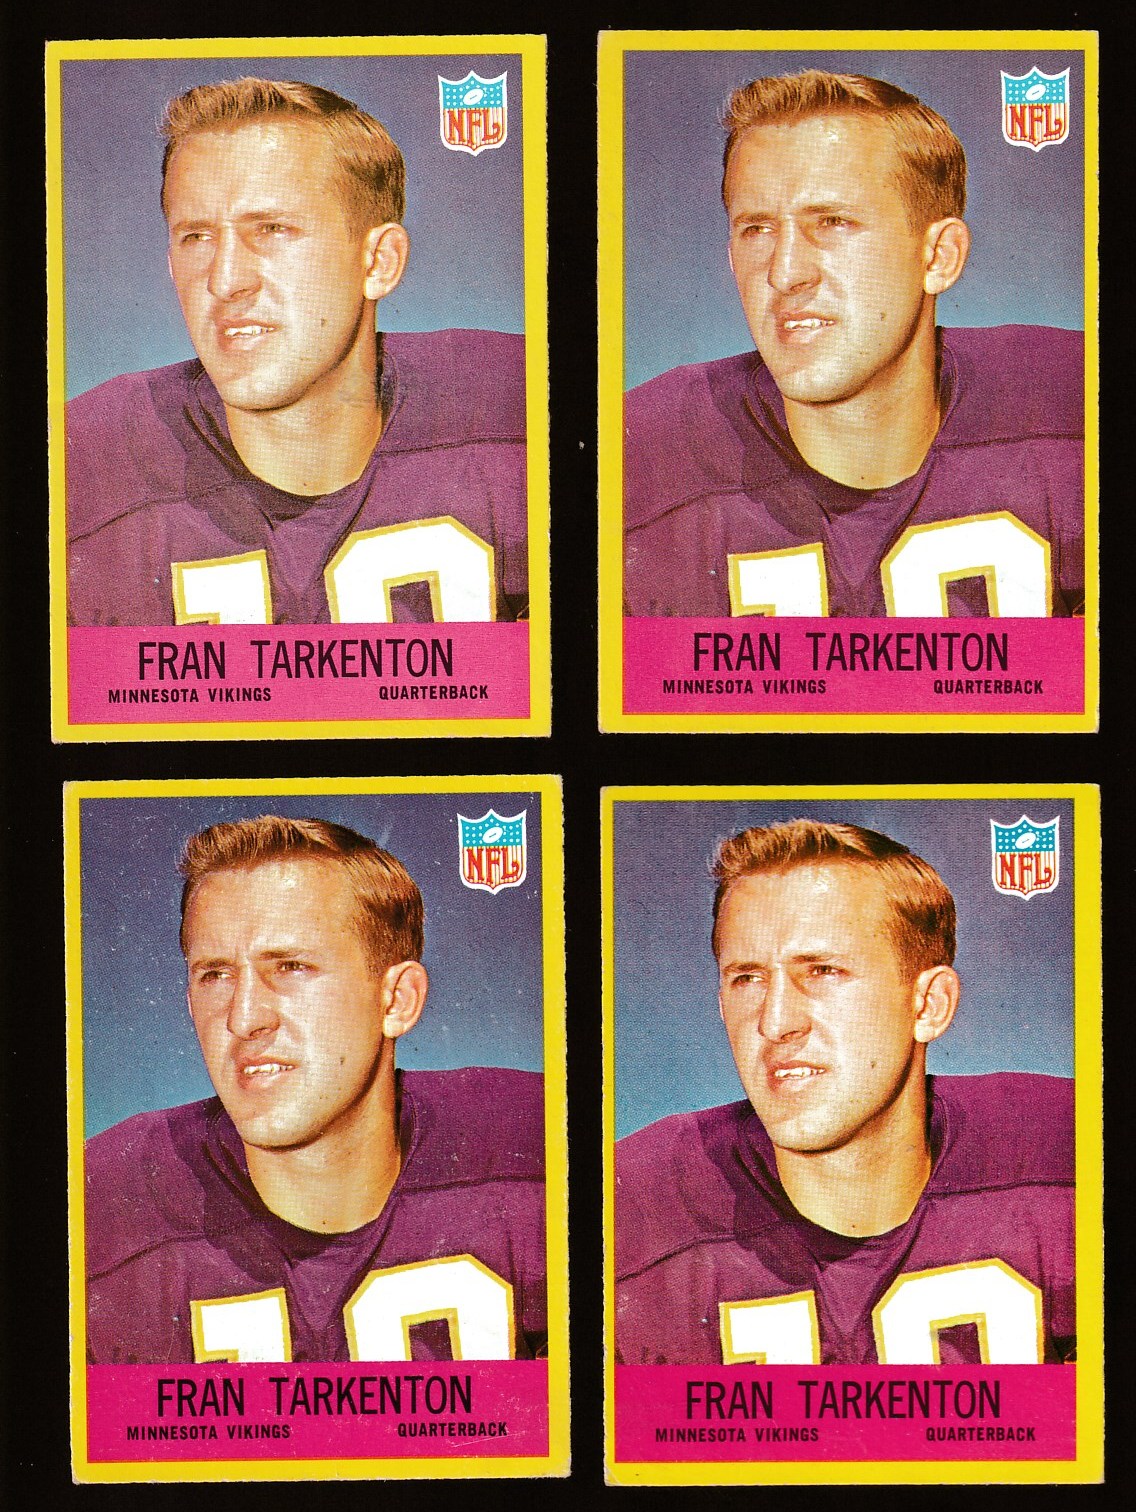 1967 Philadelphia FB #106 Fran Tarkenton [#] (Vikings) Football cards value